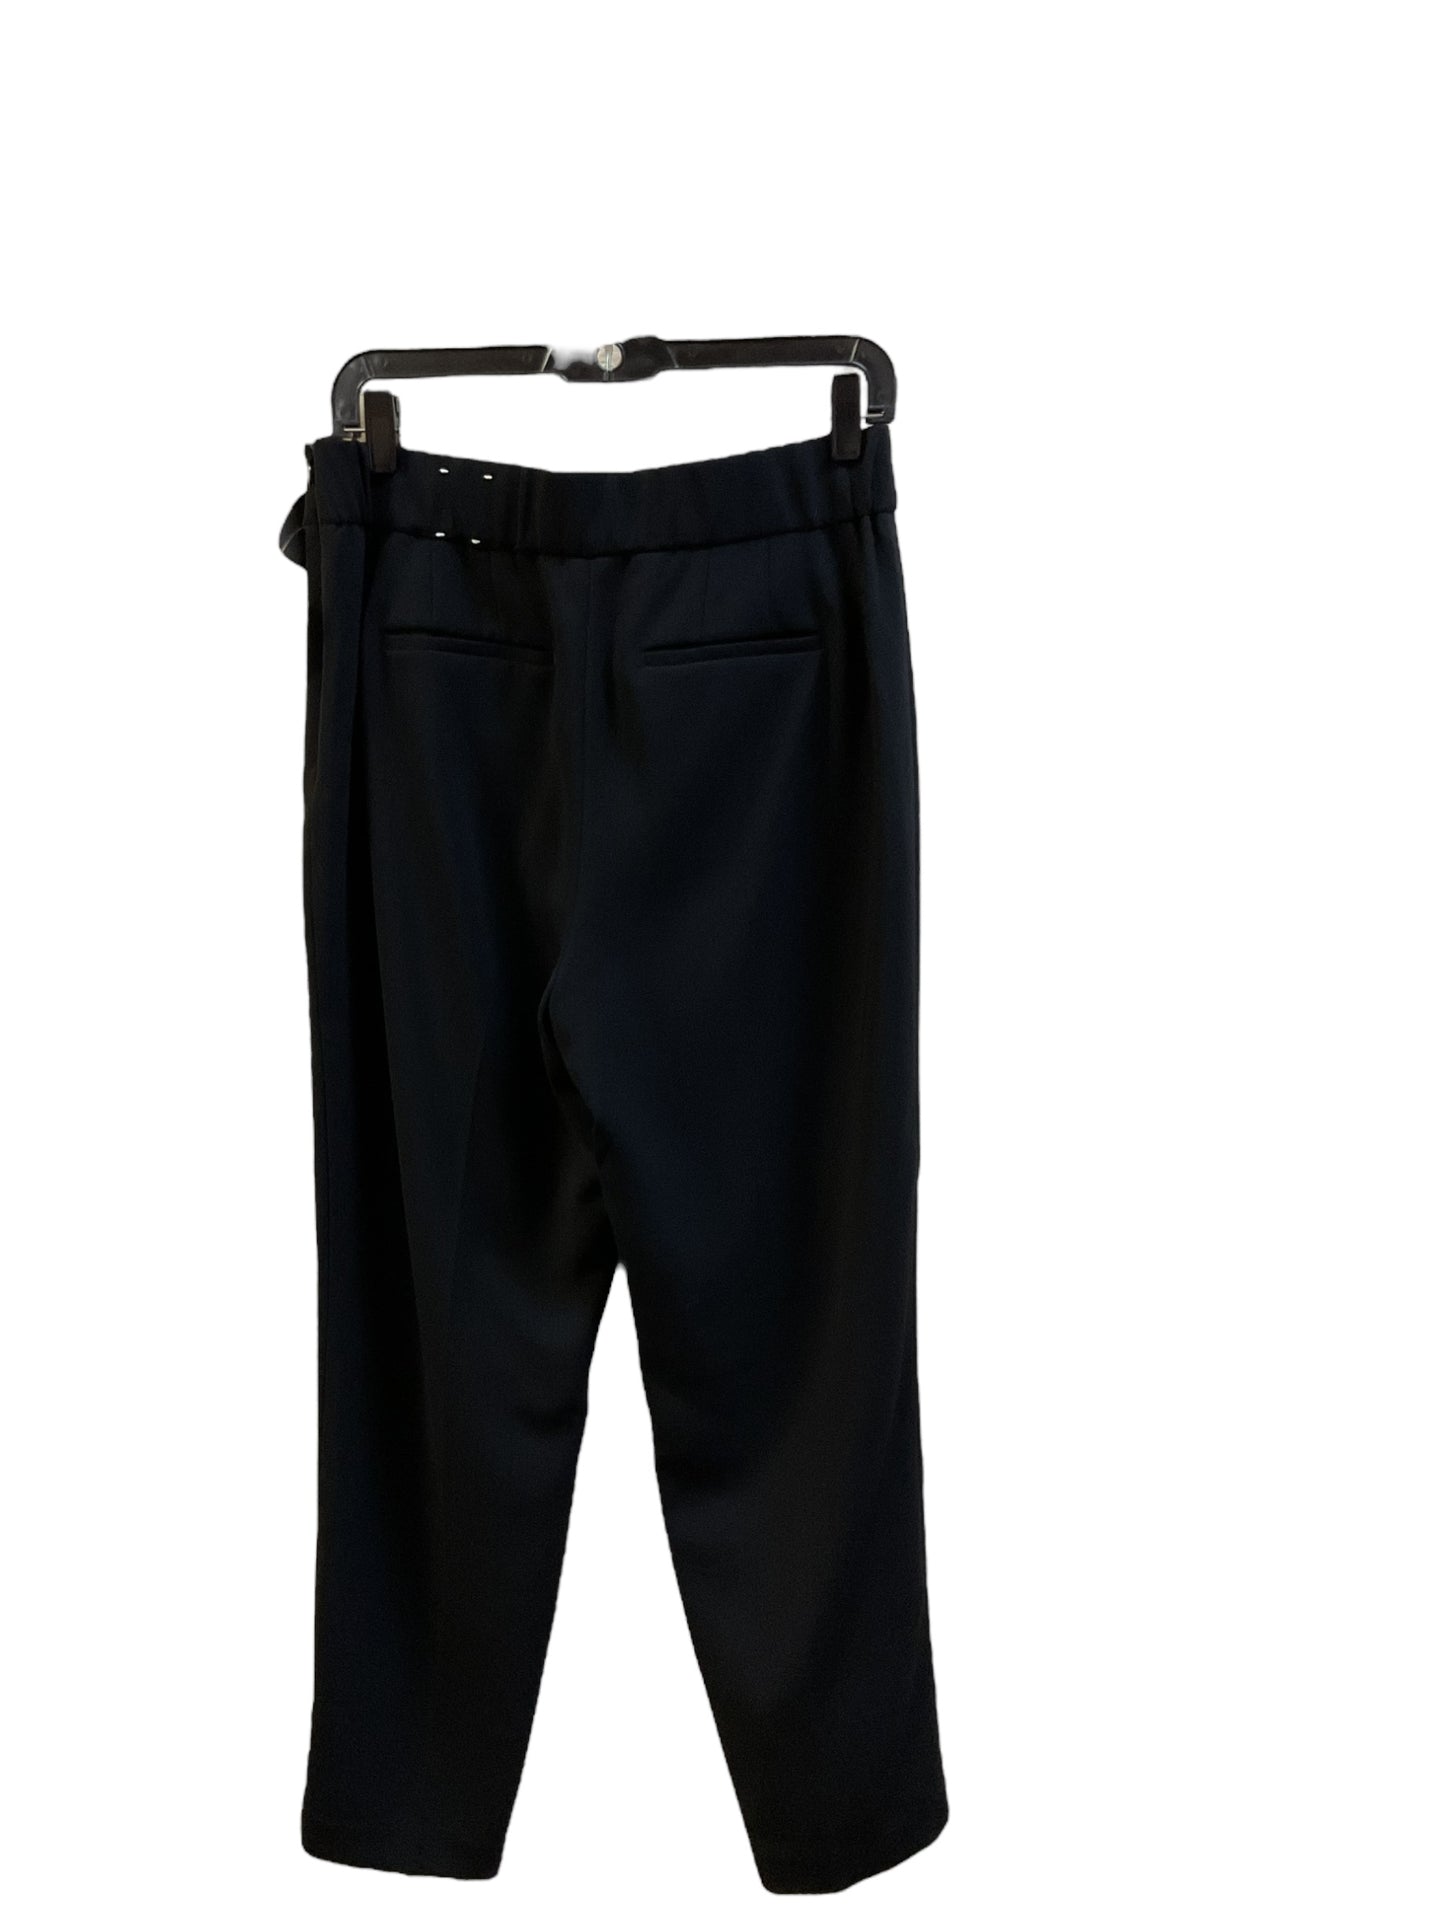 Pants Work/dress By Talbots  Size: 6